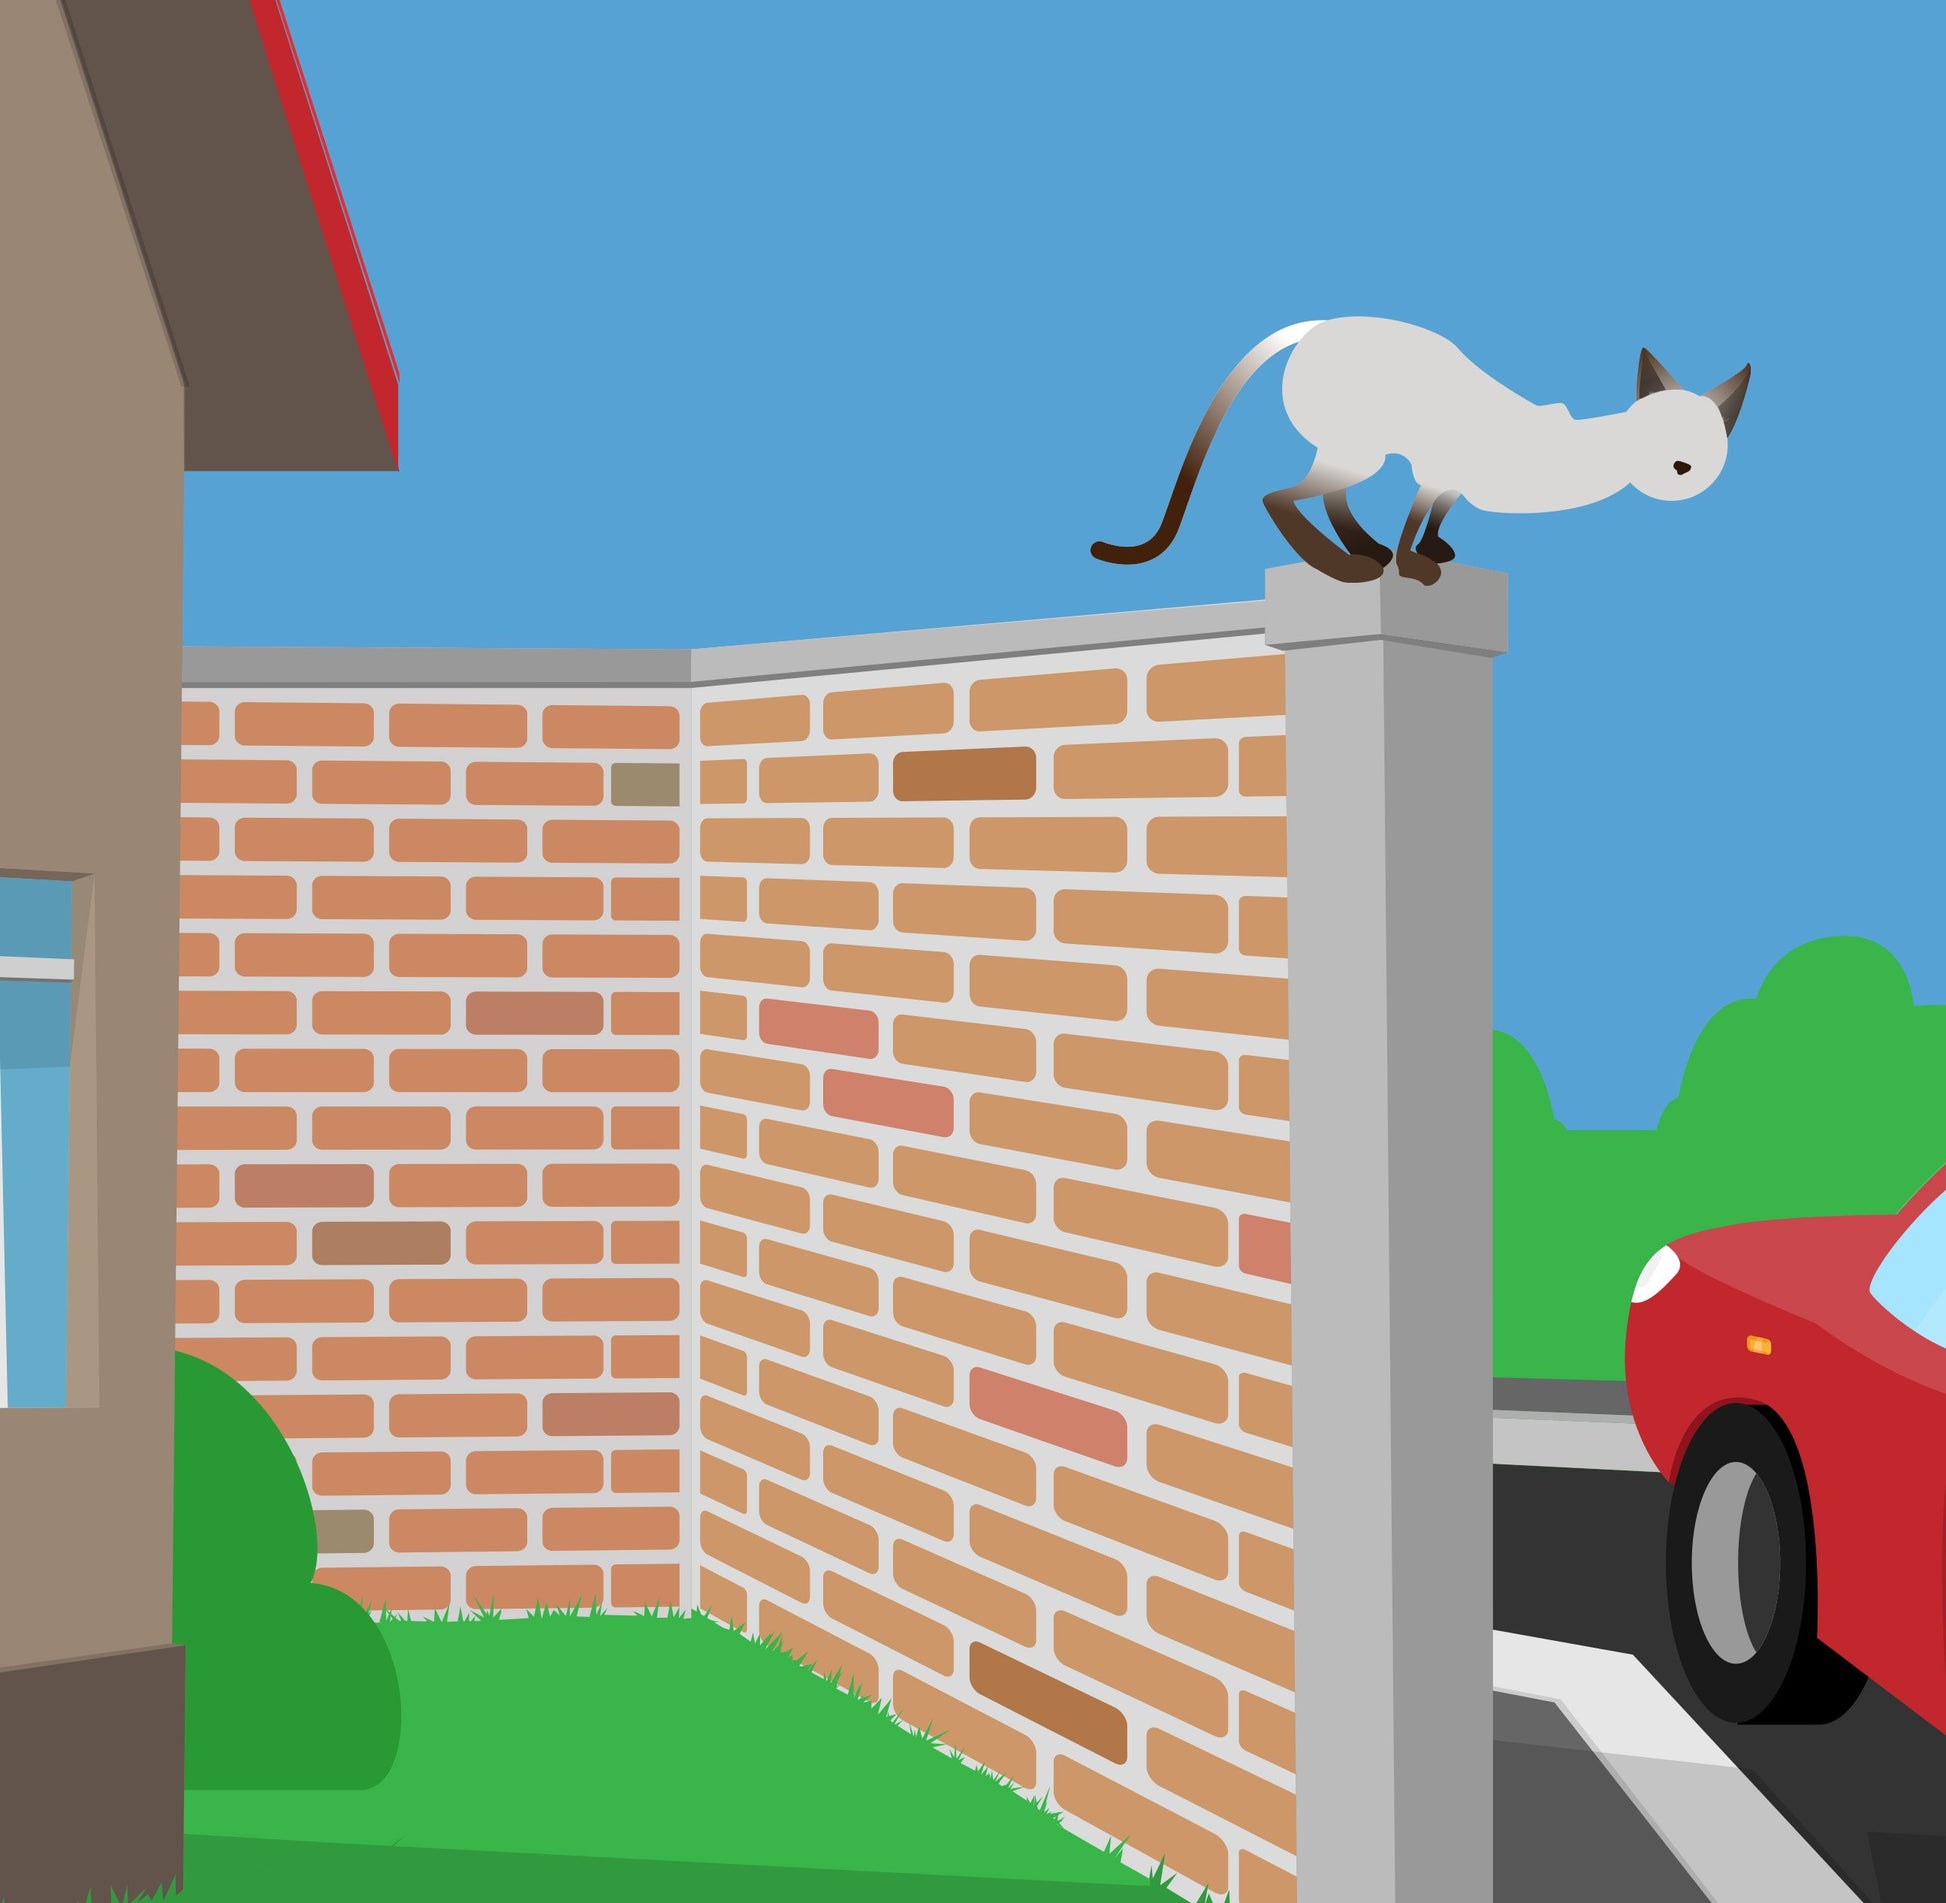 Cat Proof Fence Installation Pack - Masonry Fences 50m | SmartCatsStayHome